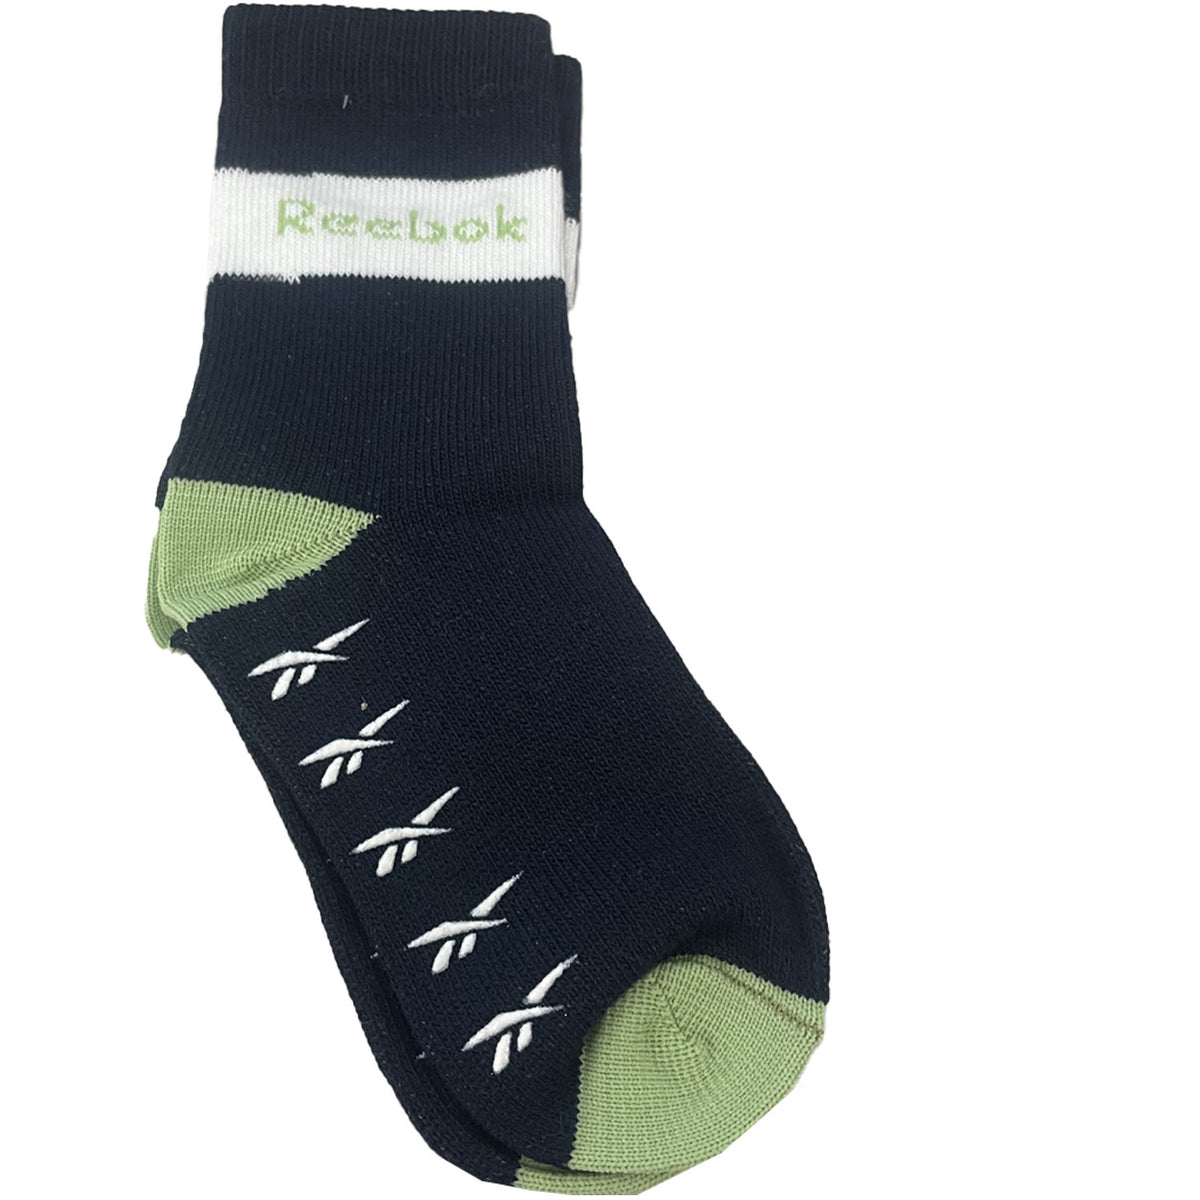 Reebok Infants 3 Pack Contrast Socks